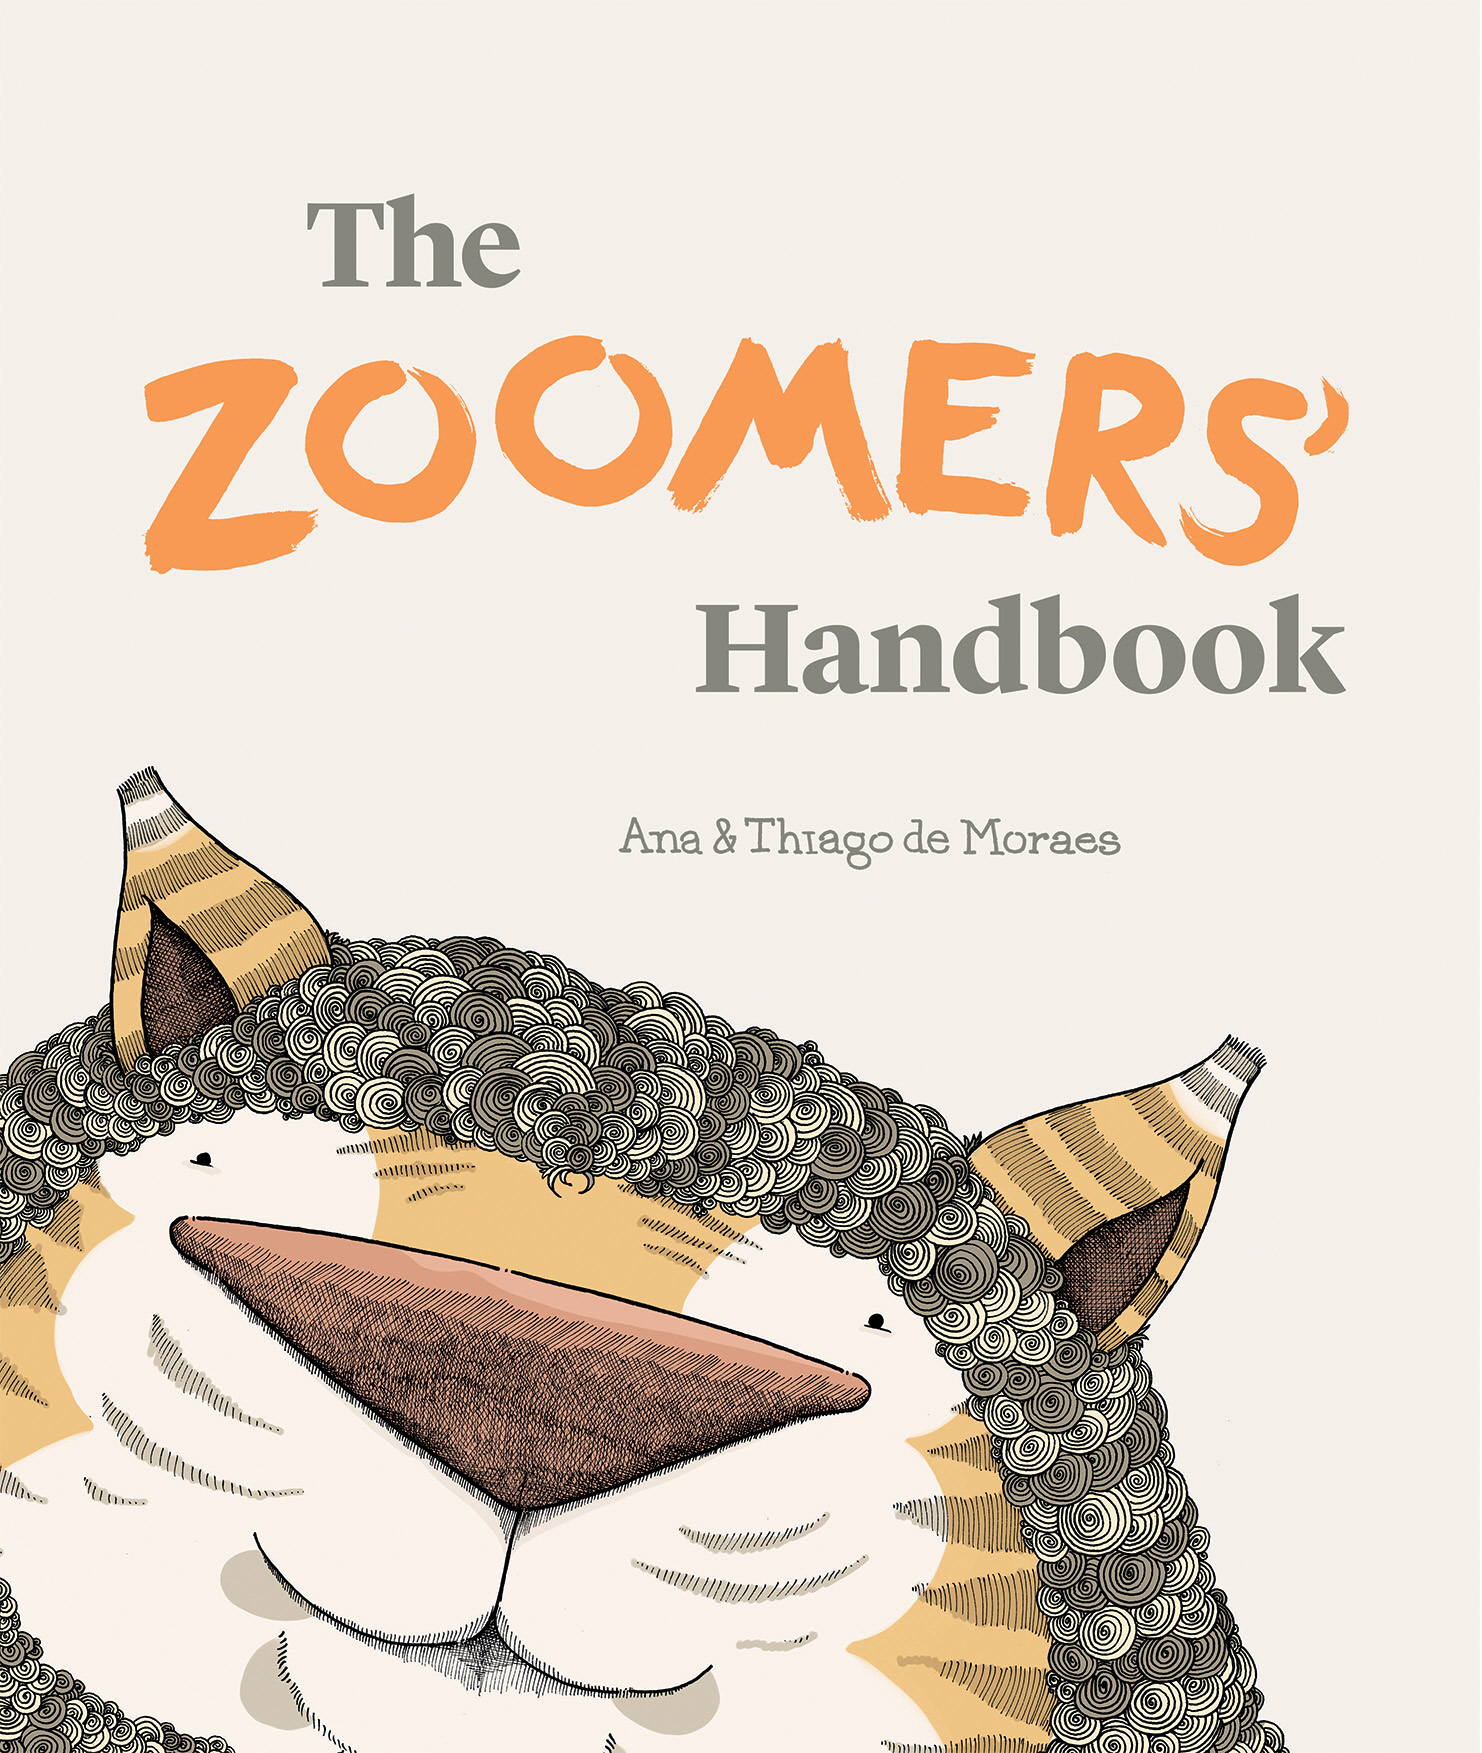 The Zoomers' Handbook